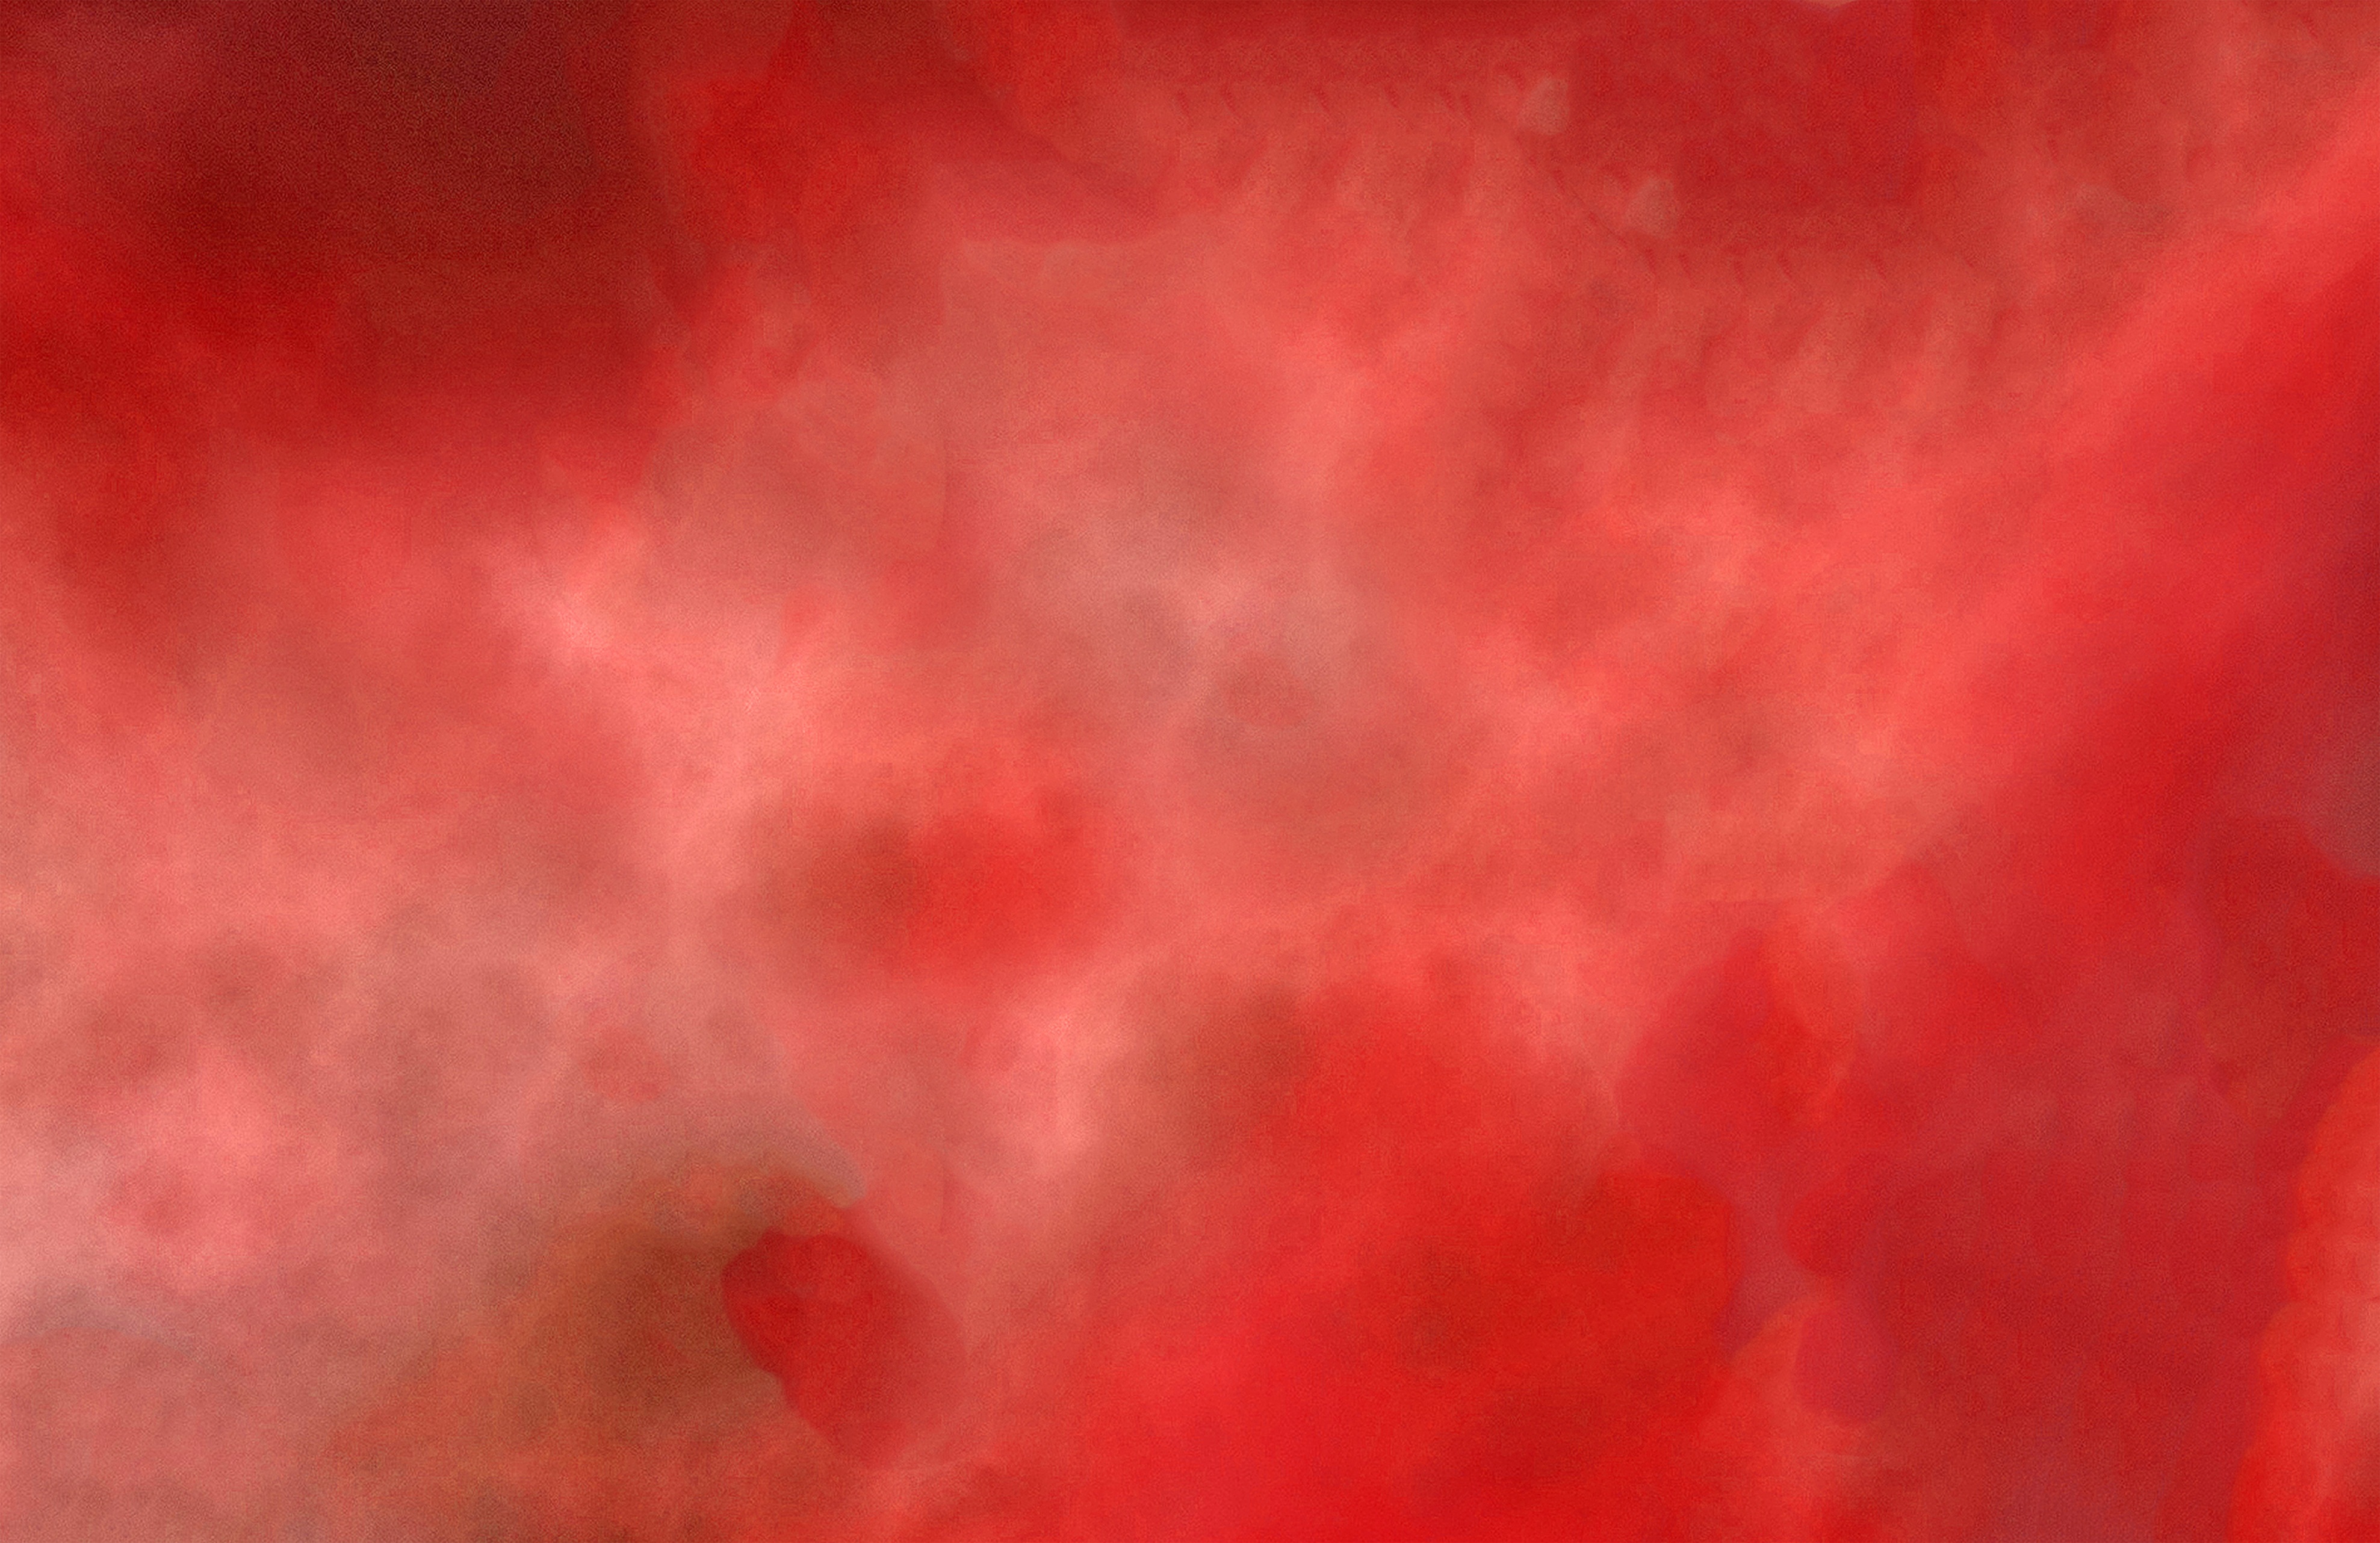 Red smoke background free image